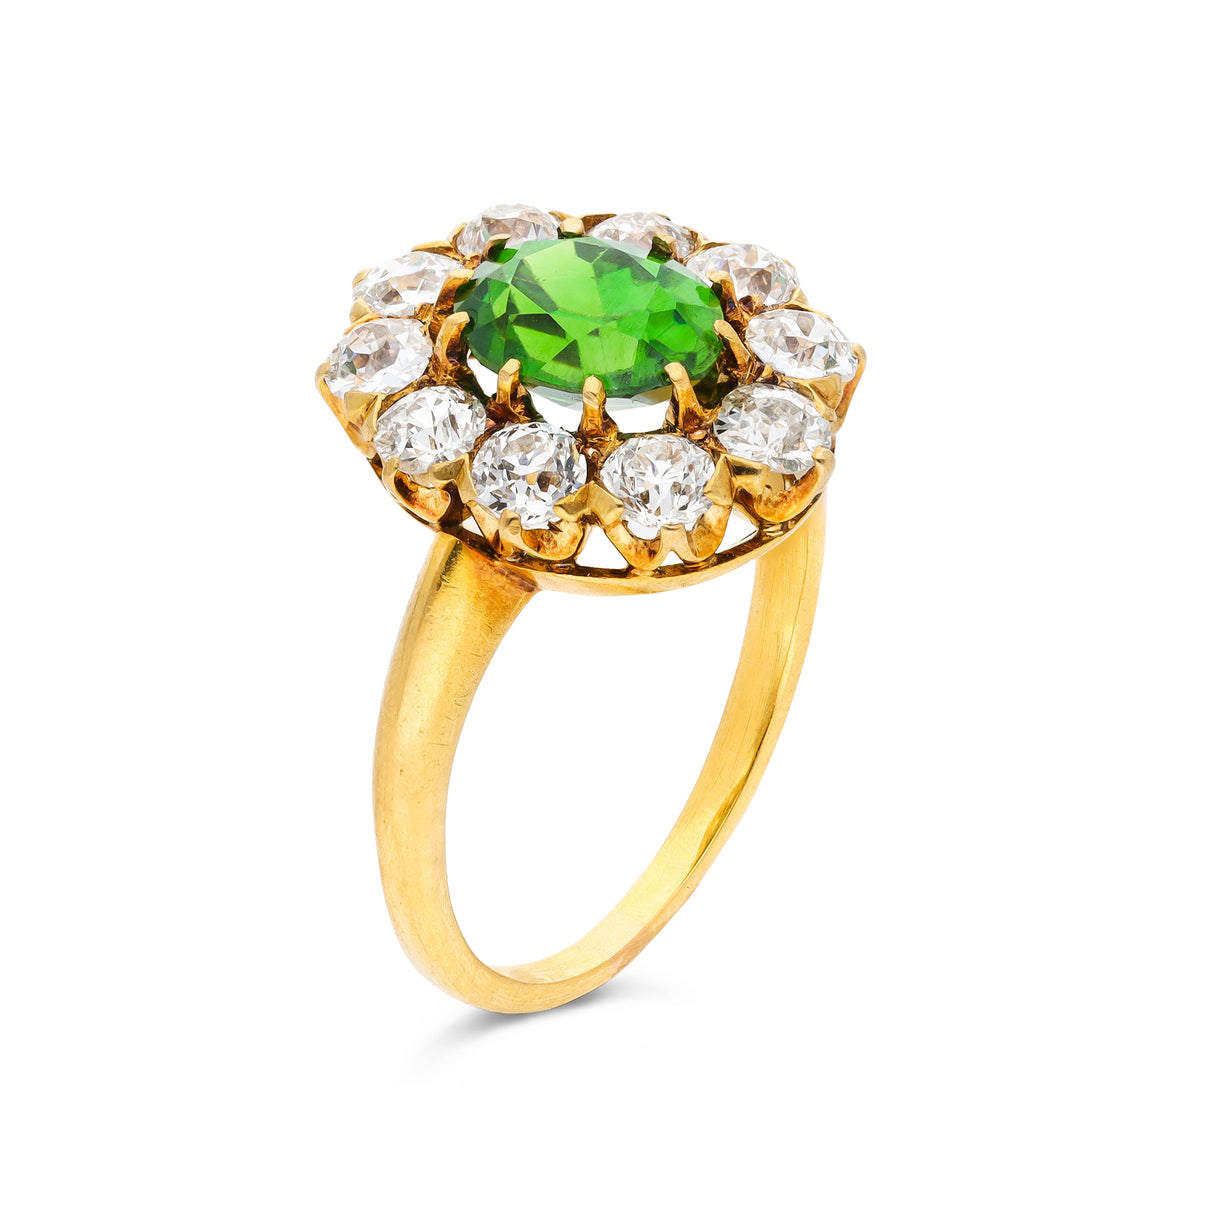 Antique, Edwardian, Demantoid Green Garnet and Diamond Cluster Ring, 18ct Yellow Gold